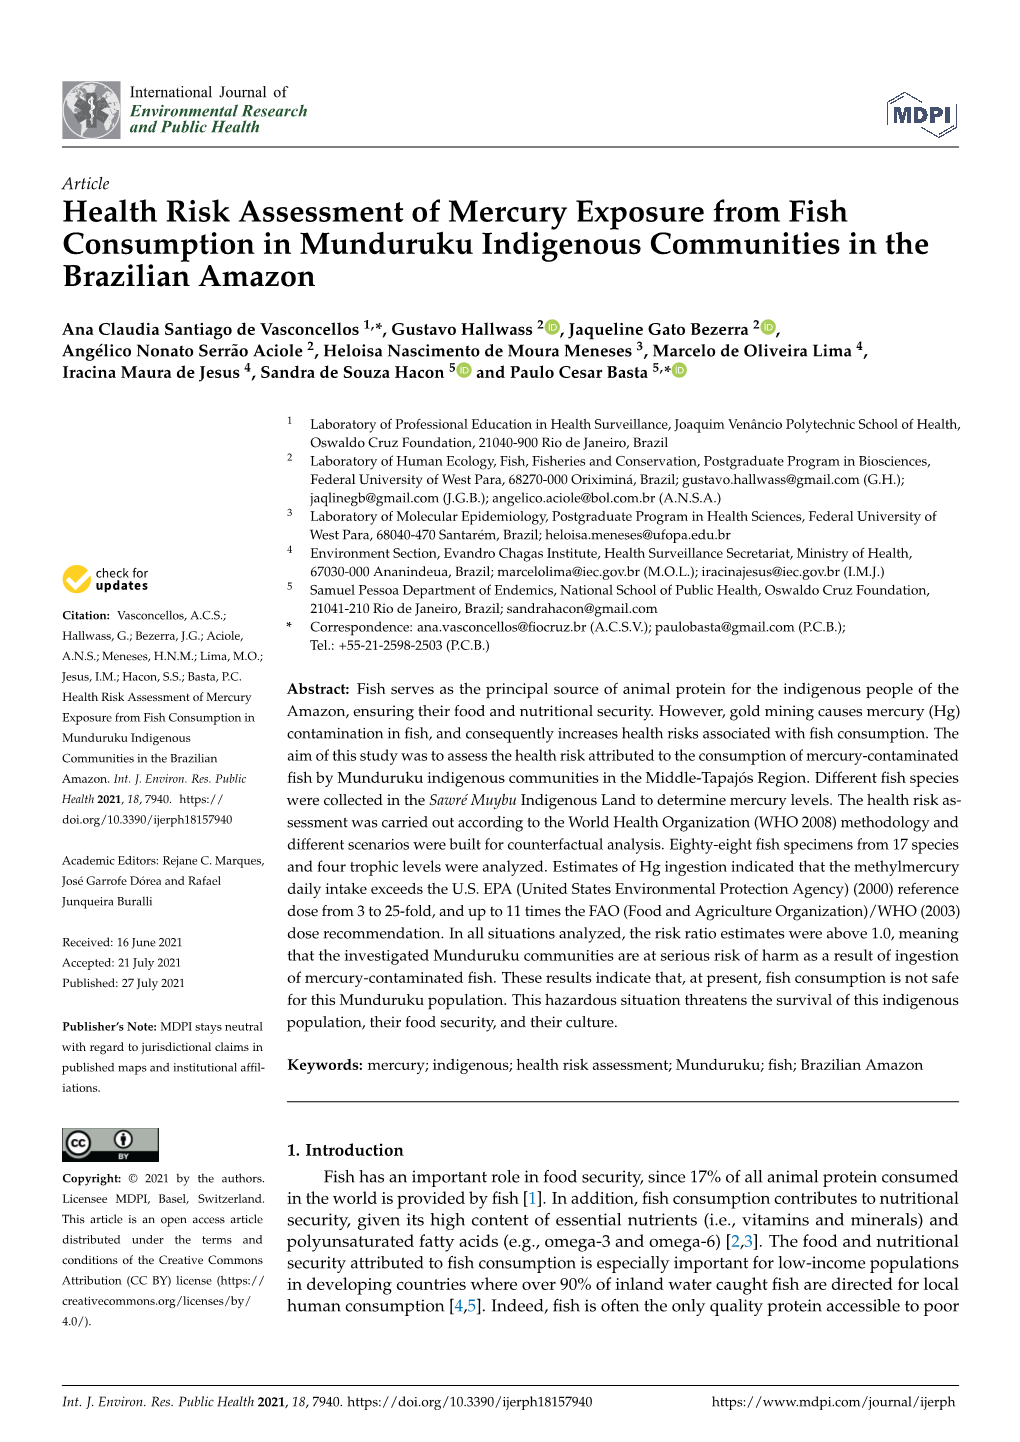 Health Risk Assessment of Mercury Exposure from Fish Consumption in Munduruku Indigenous Communities in the Brazilian Amazon